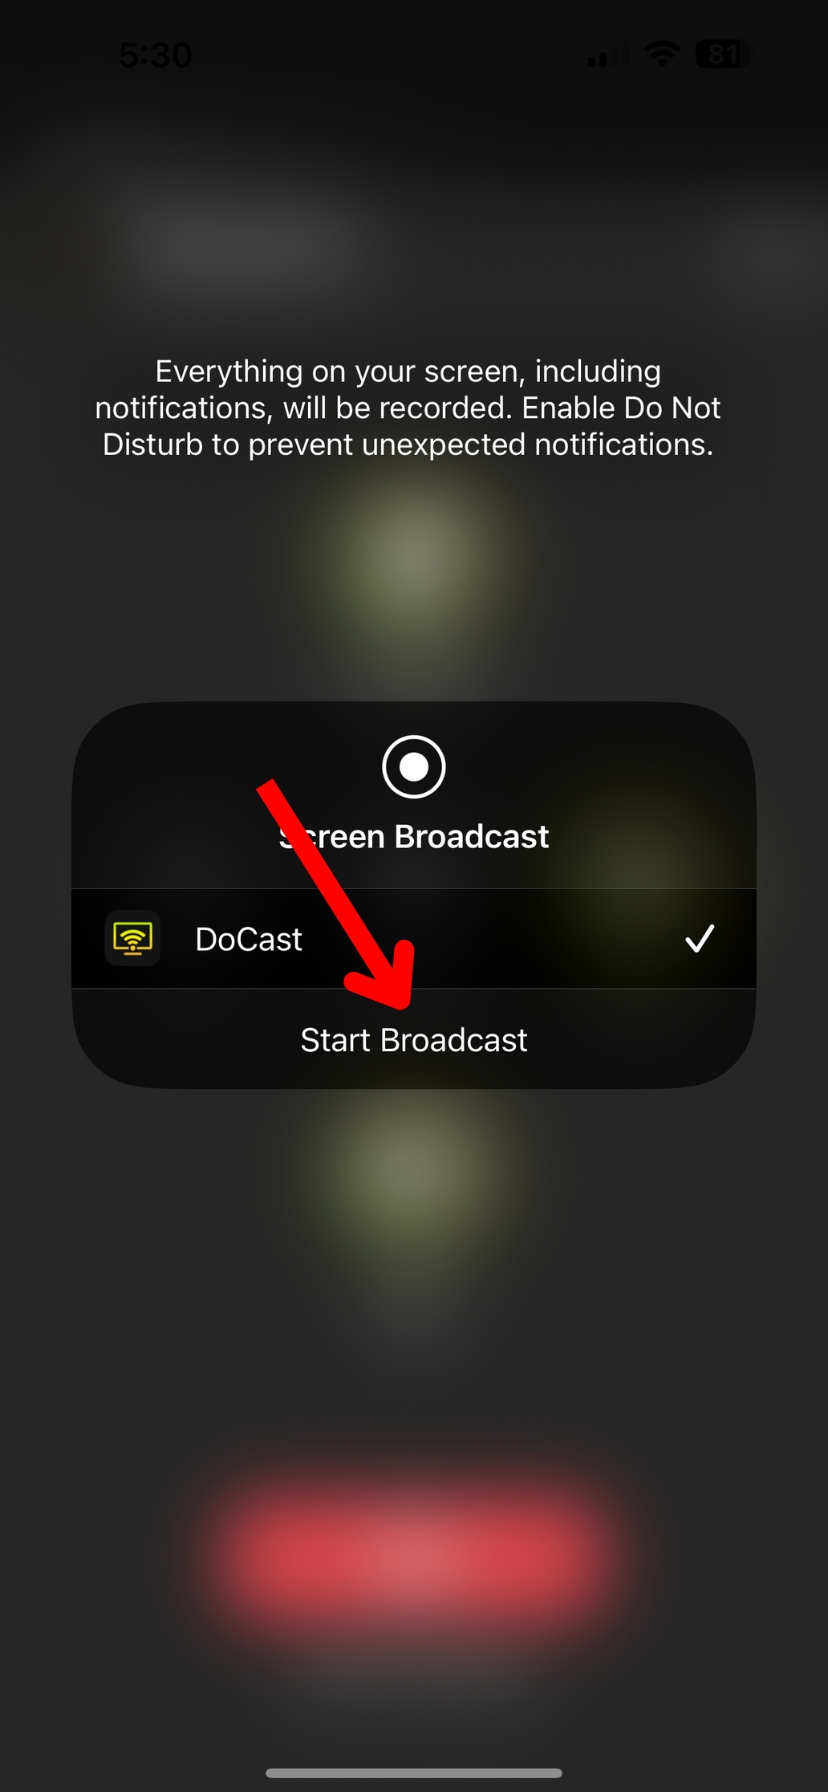 Press on the Start Broadcast button on DoCast